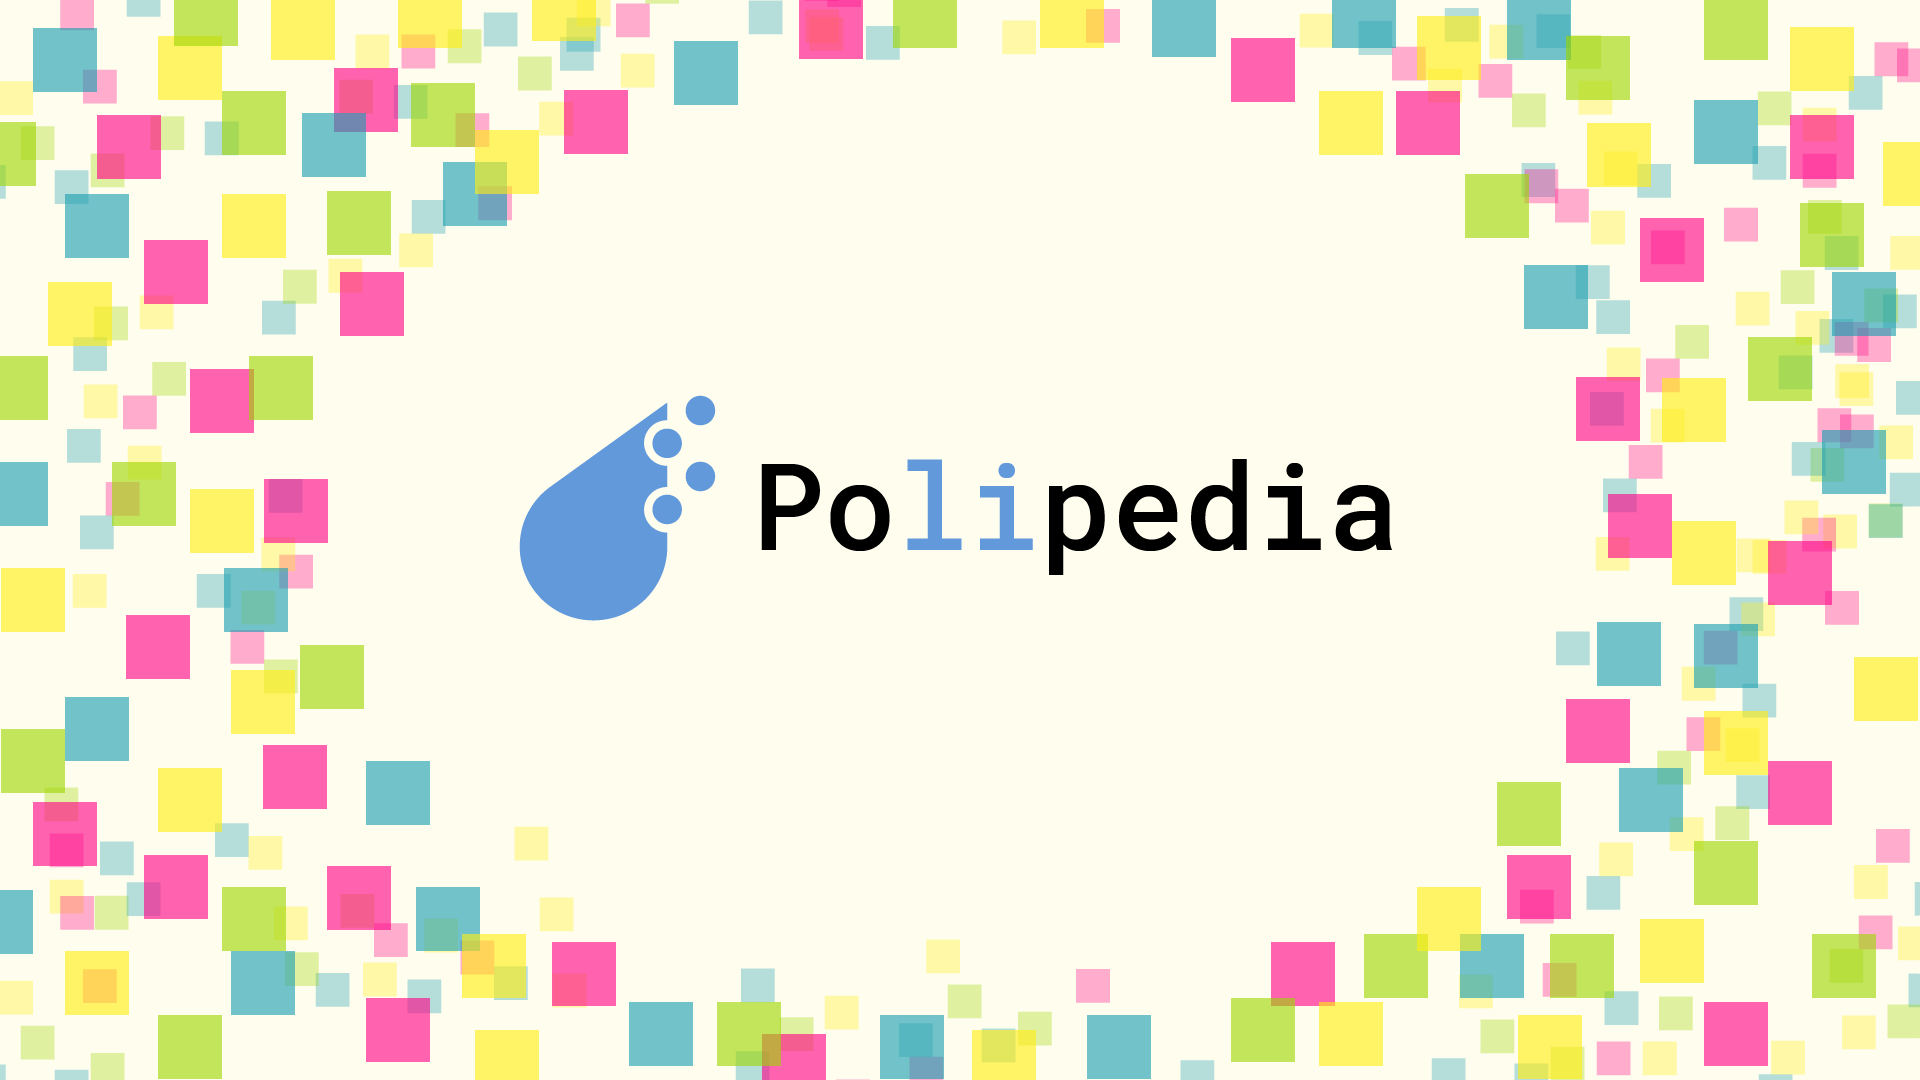 Polipedia